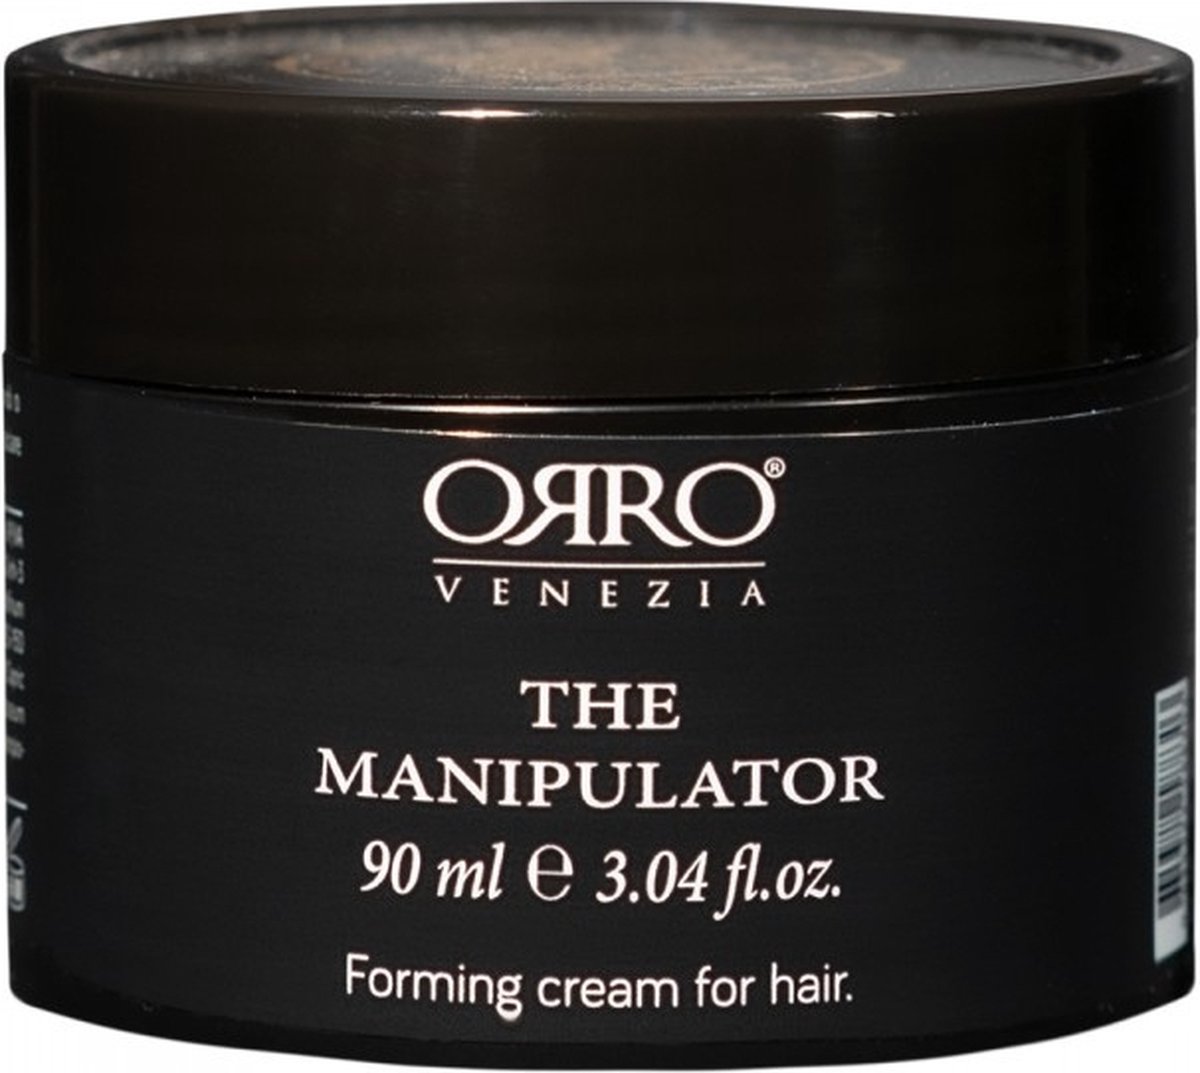 Orro Venezia - Style - The Manipulator Forming Cream - 90ml